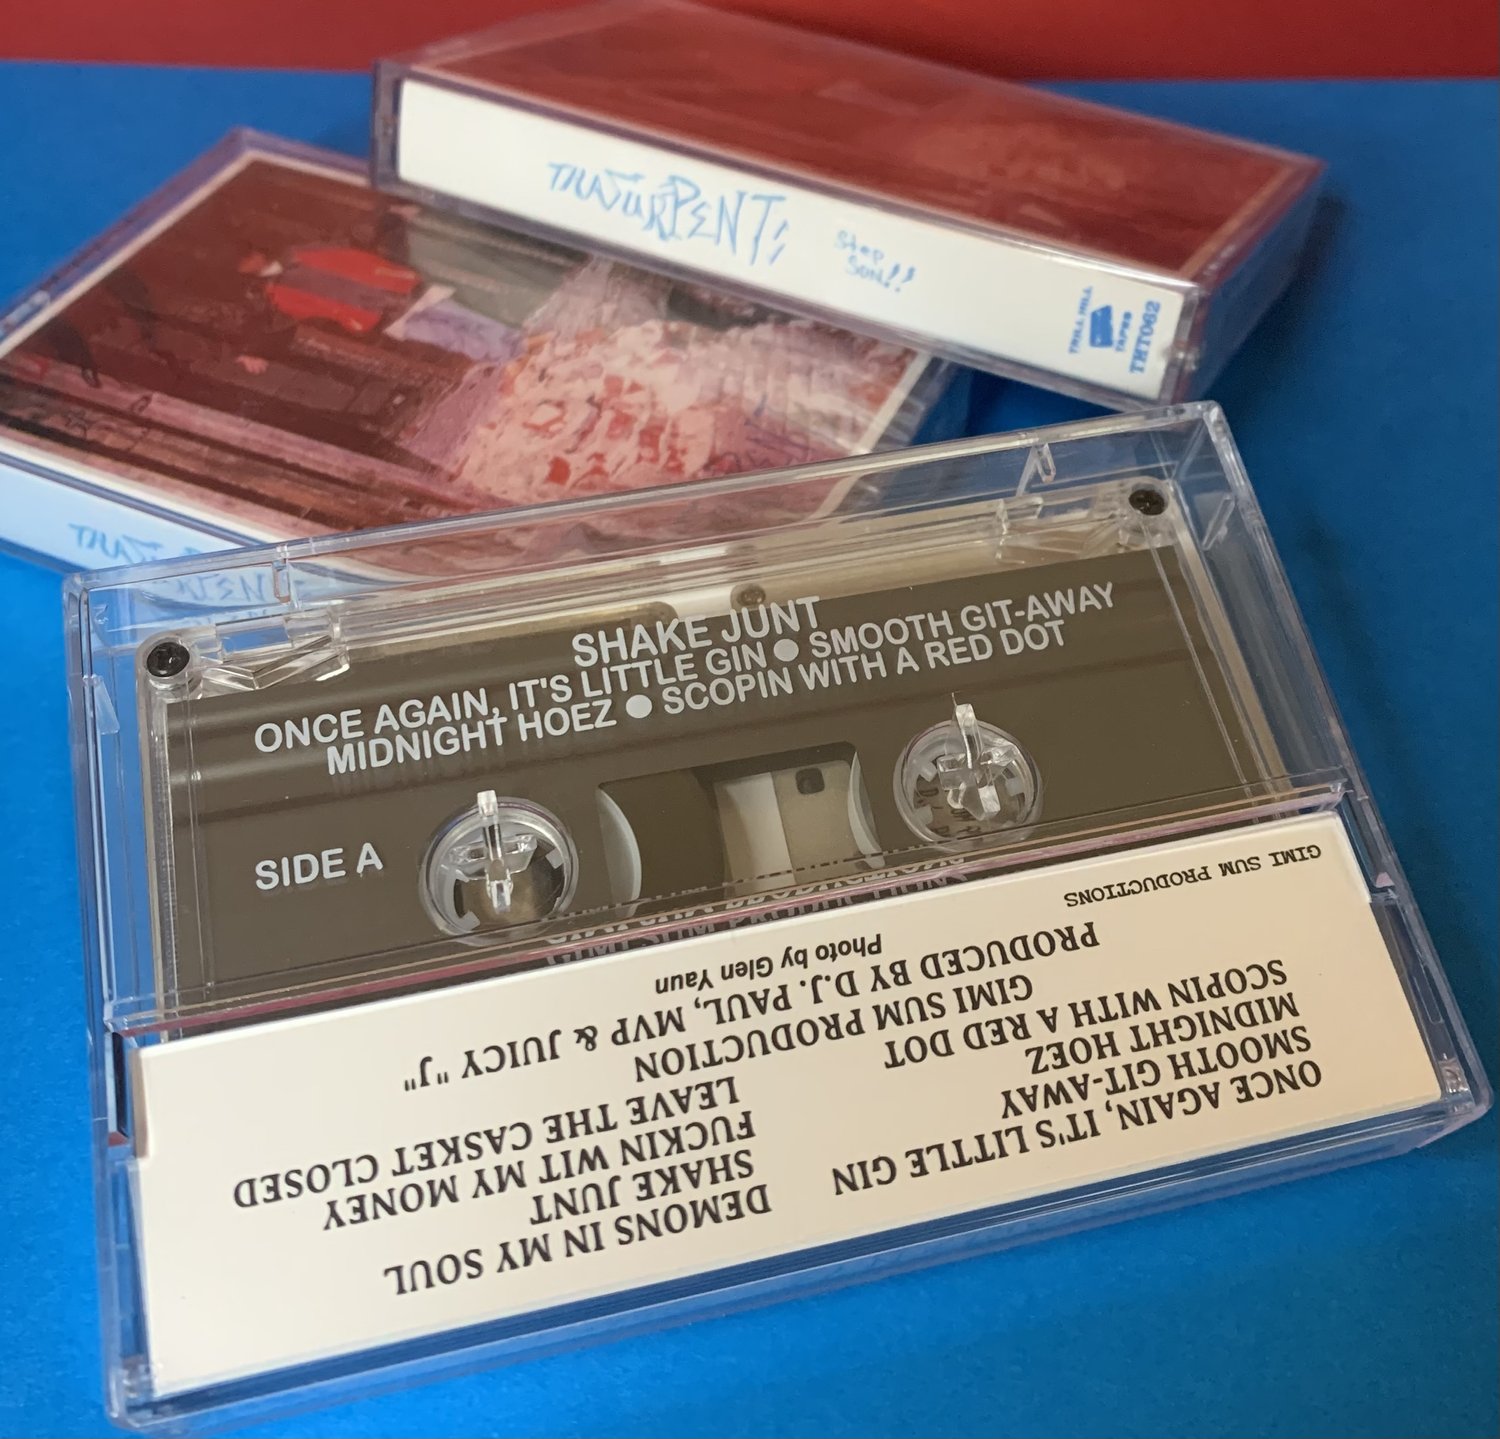 Goon Tape, Vol. 1 - EP by $kinny